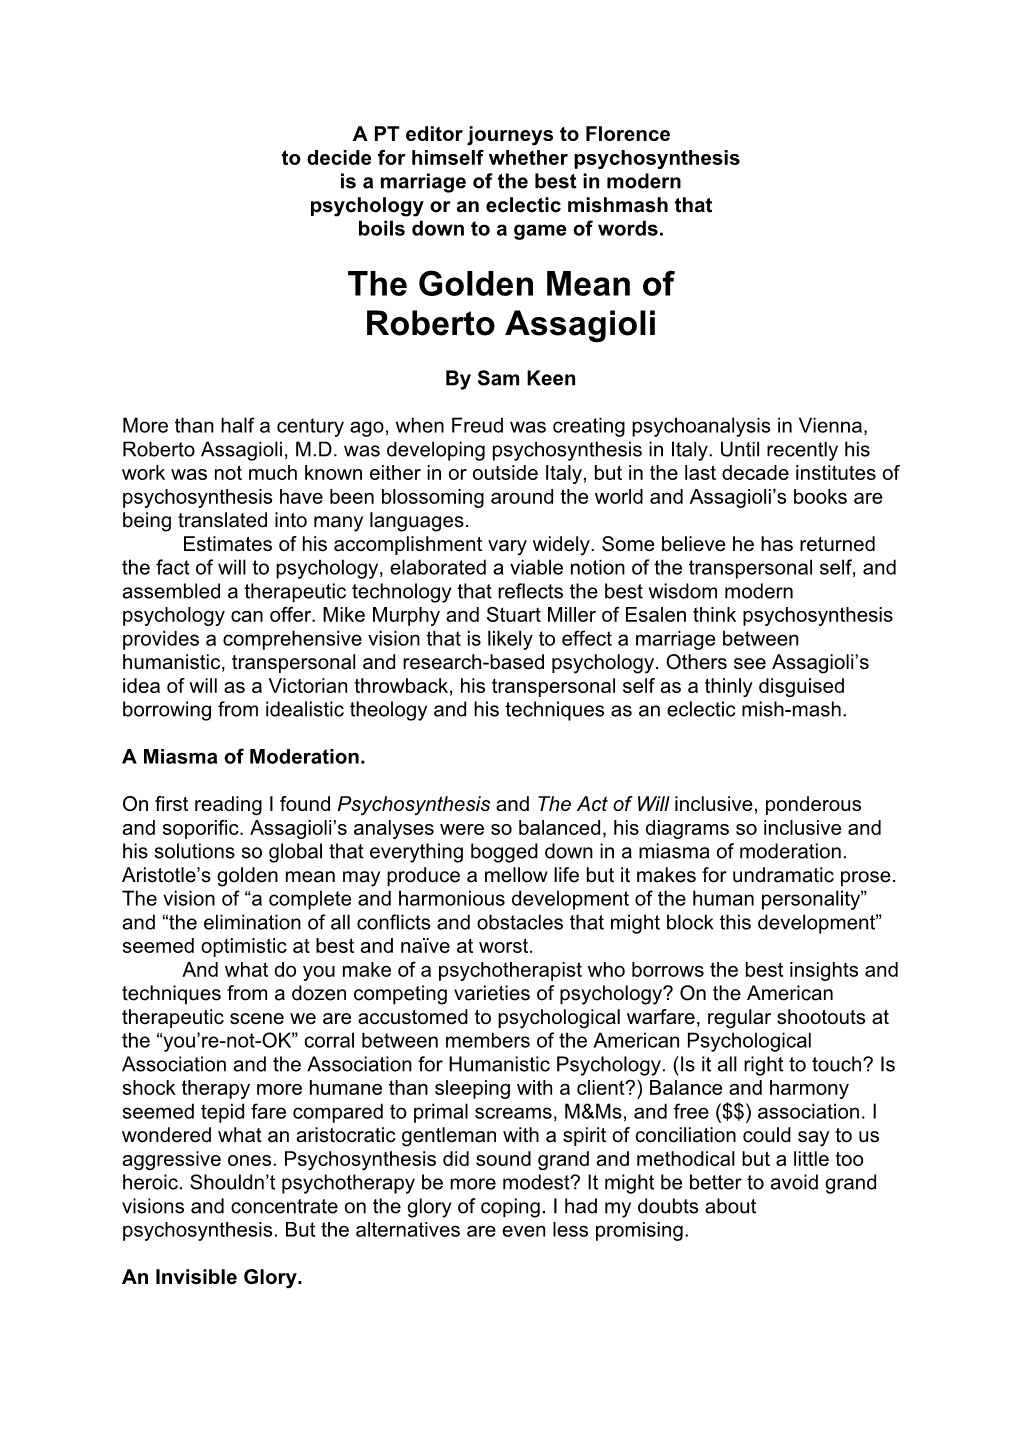 The Golden Mean of Roberto Assagioli – Sam Keen